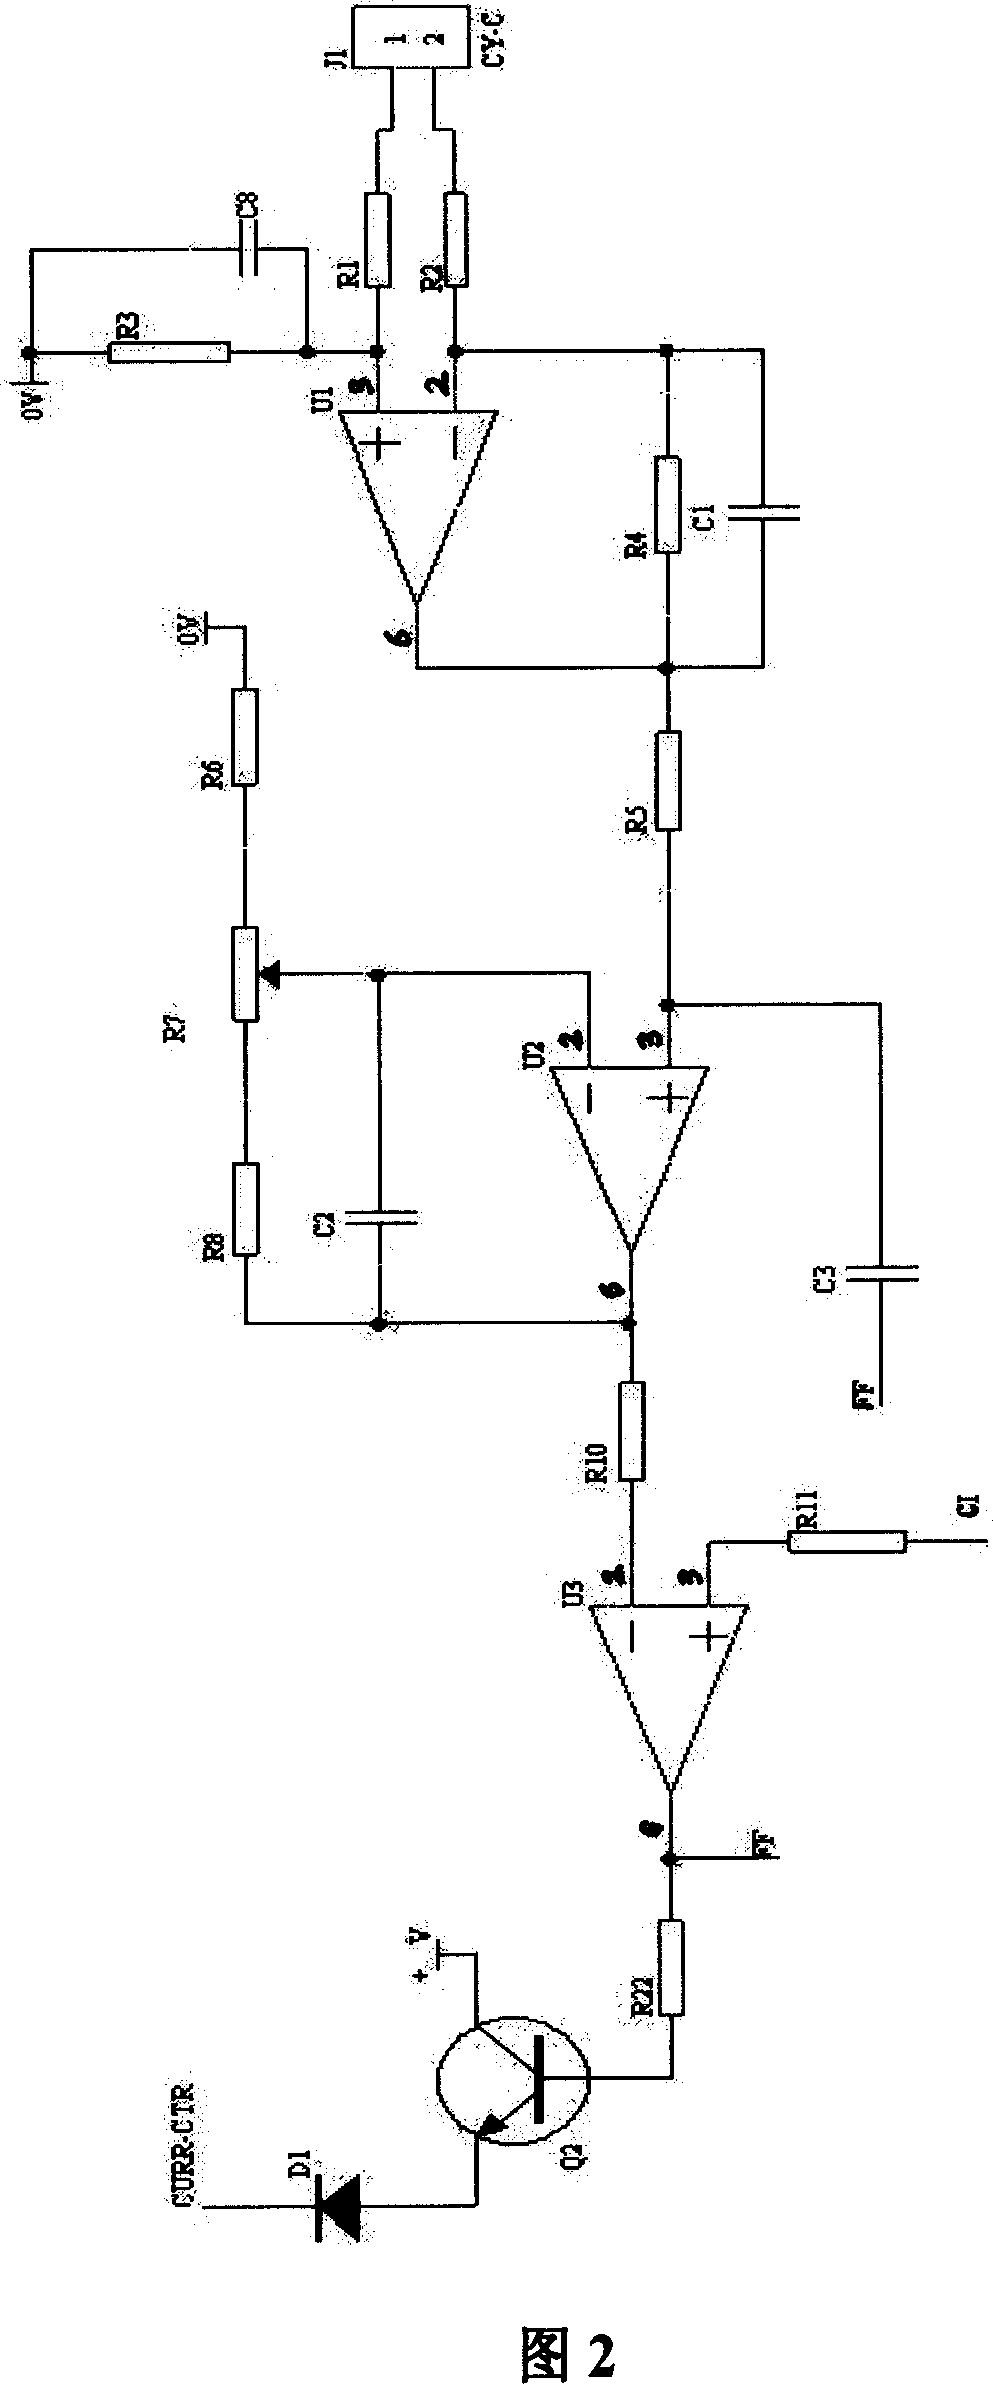 Parallel democratic bus uniform flow constant current method and its device